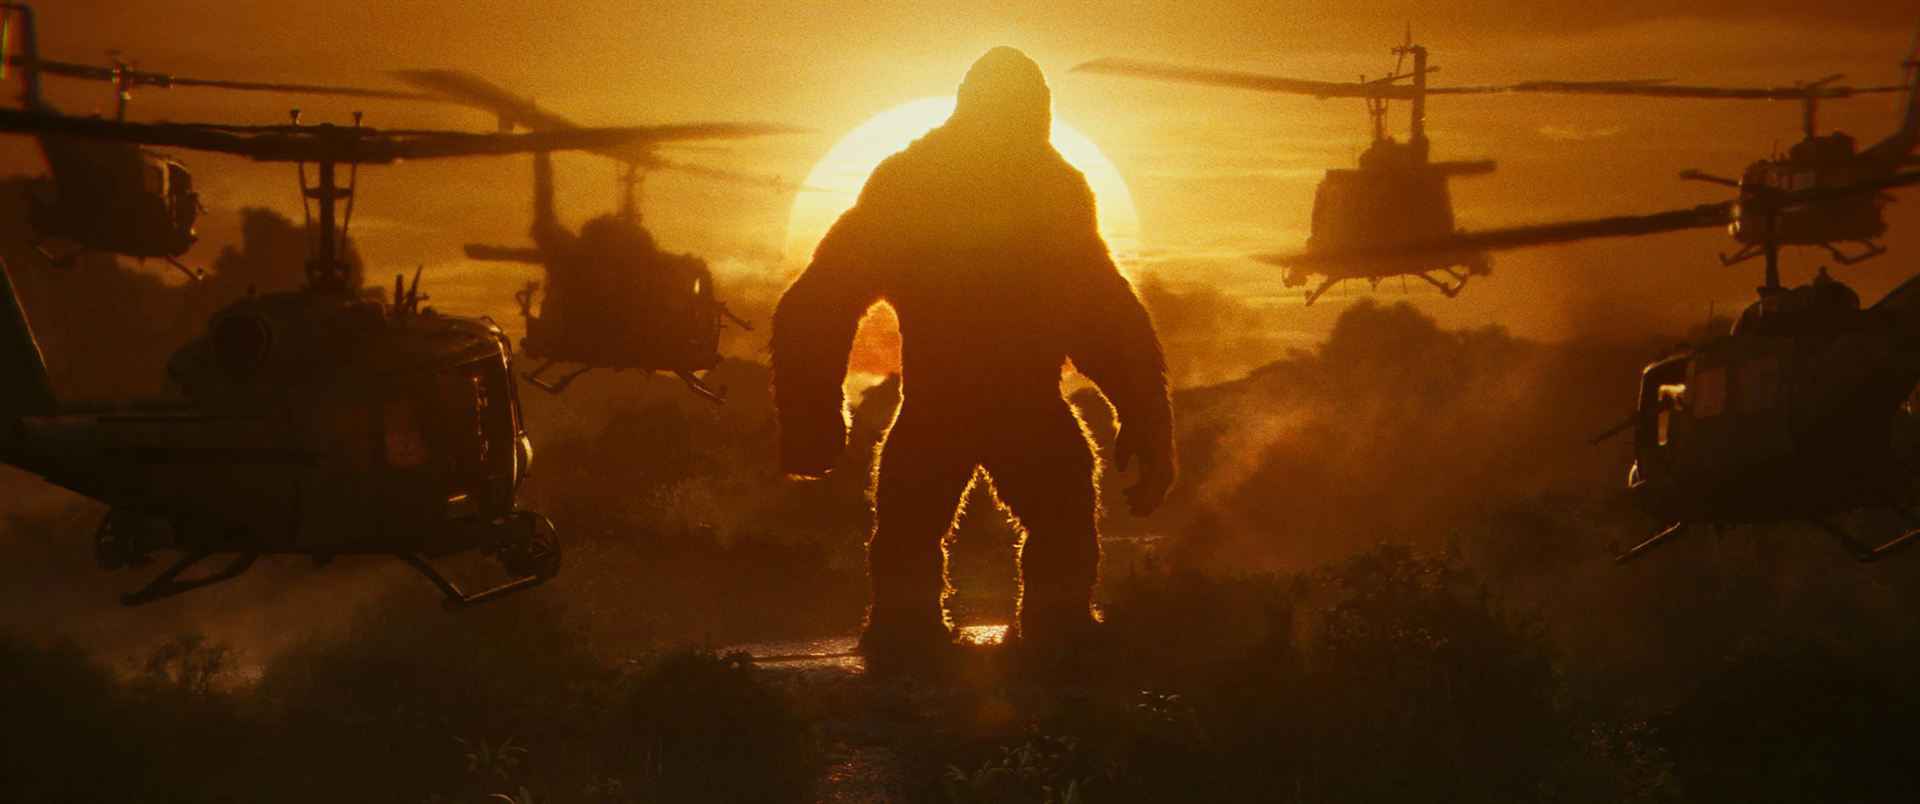 Kong: Skull Island (2017), de Jordan Vogt-Roberts